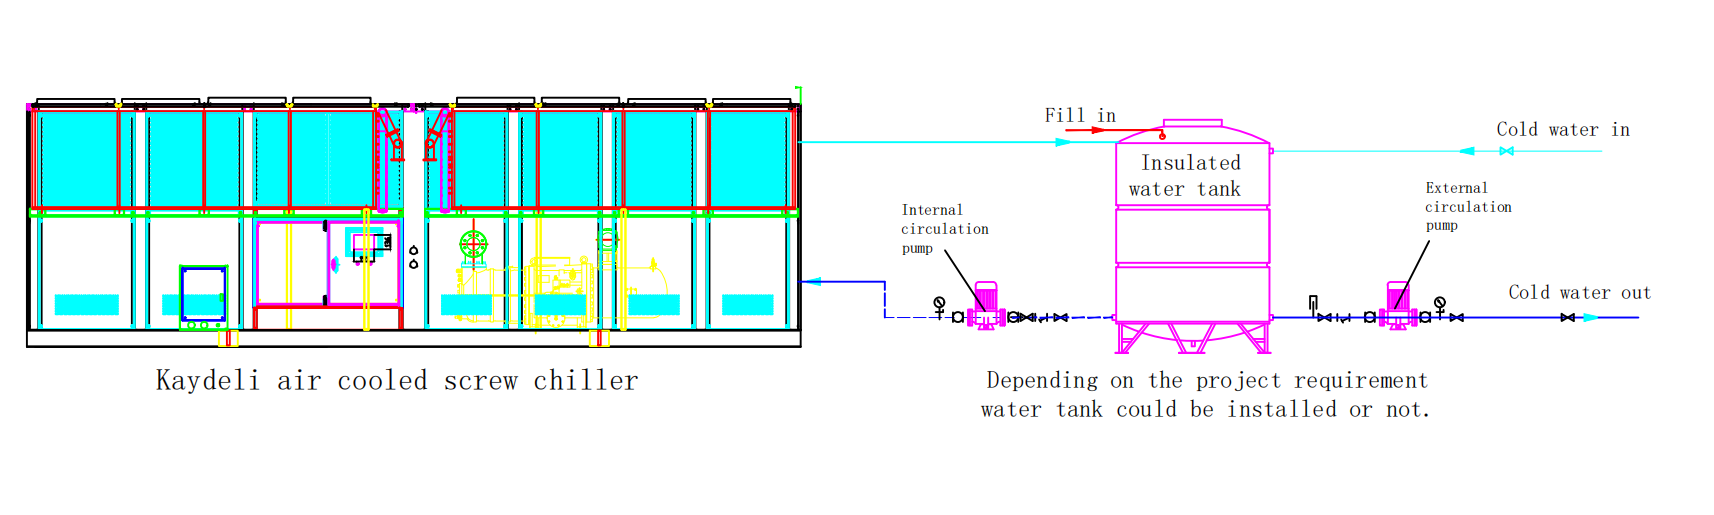 Air cooled screw chiller installation diagram